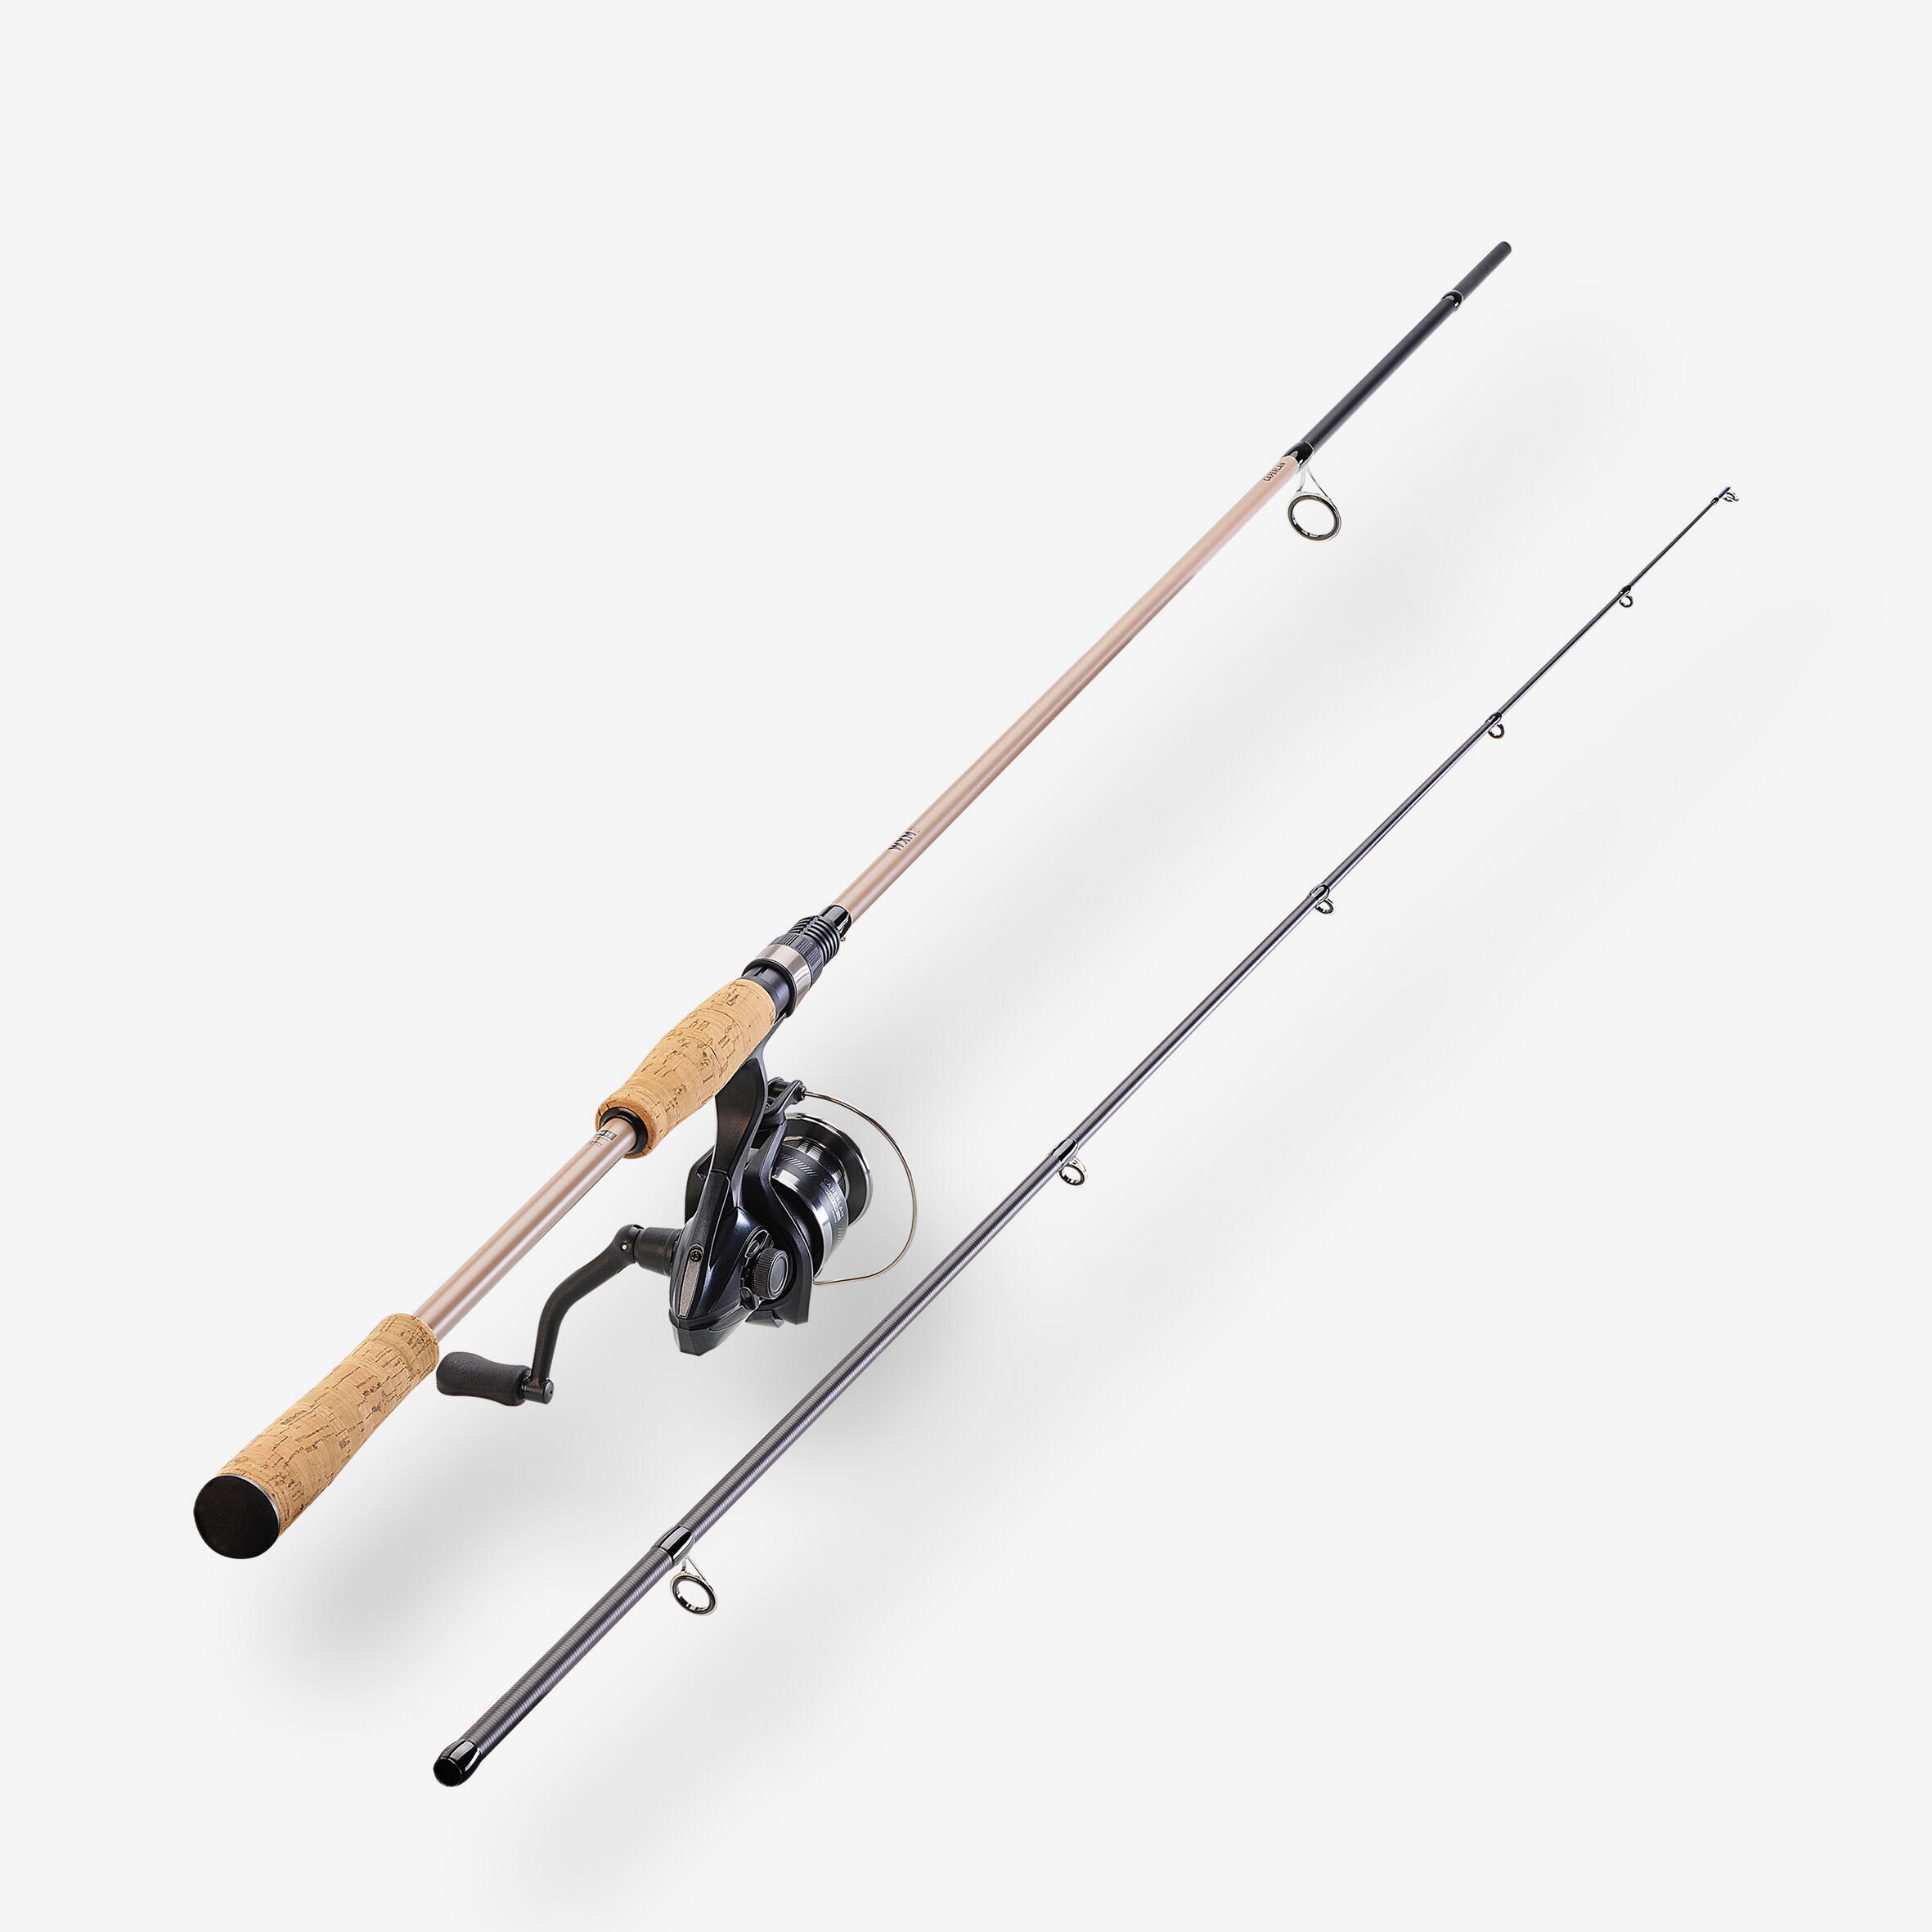 Fishing Rods, Lures, Baits, Ice Fishing & Equipment - Decathlon